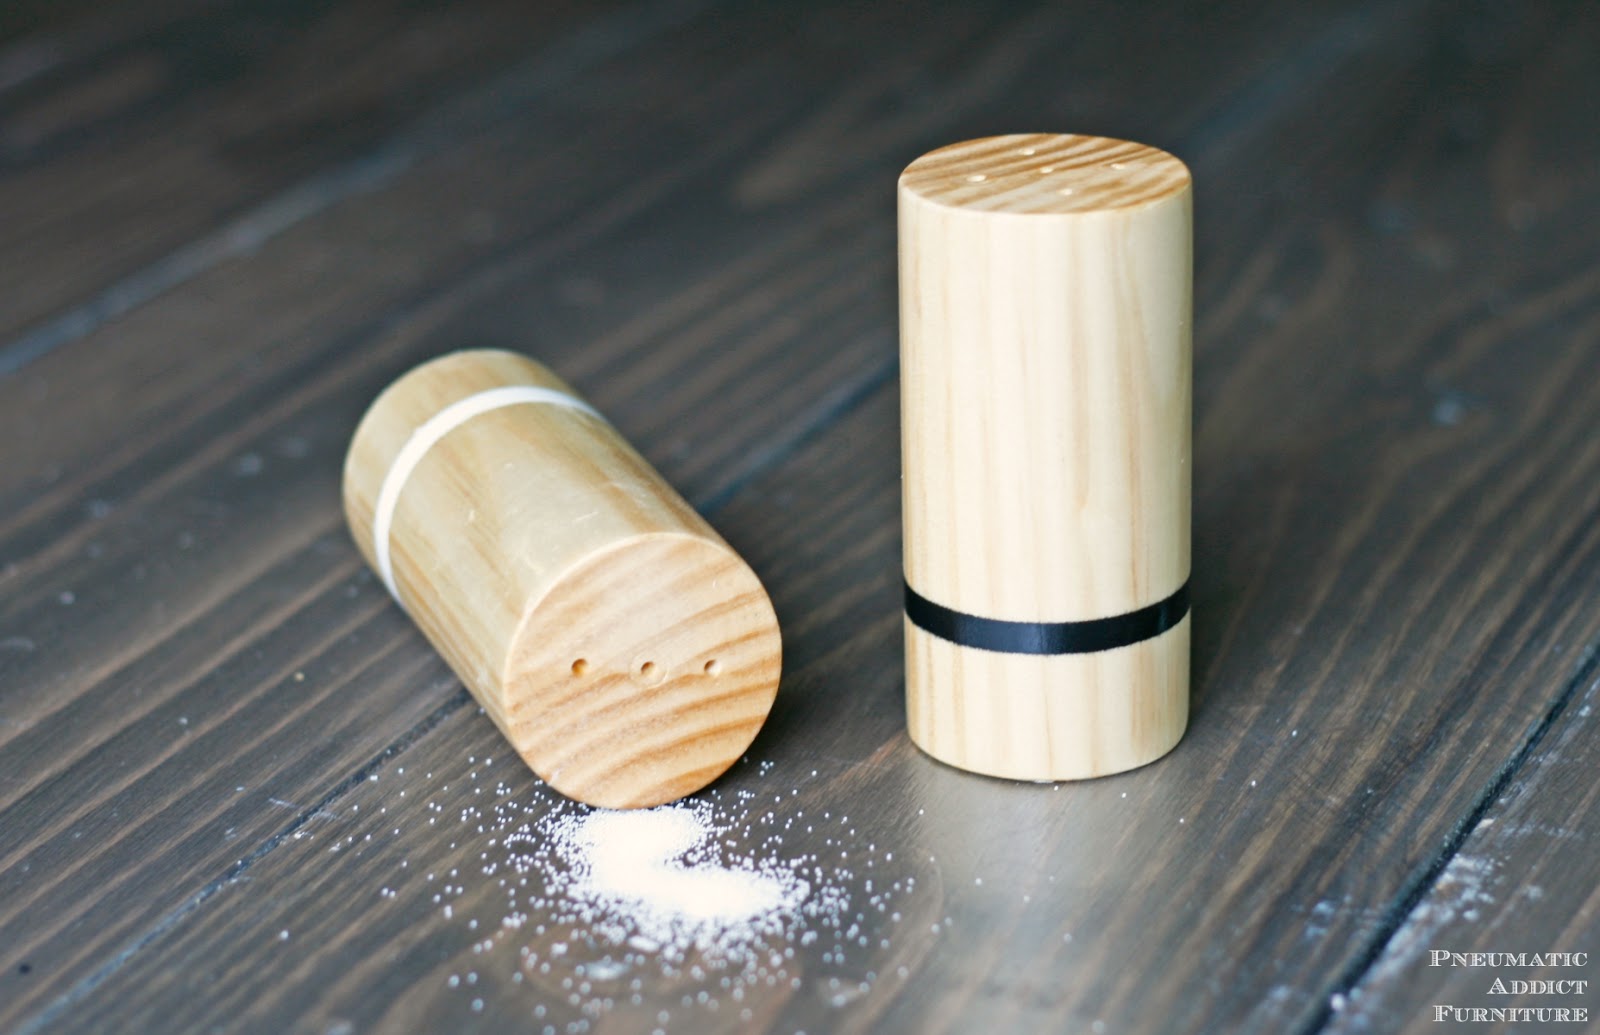 Pneumatic Addict : Wood Salt and Pepper Shakers